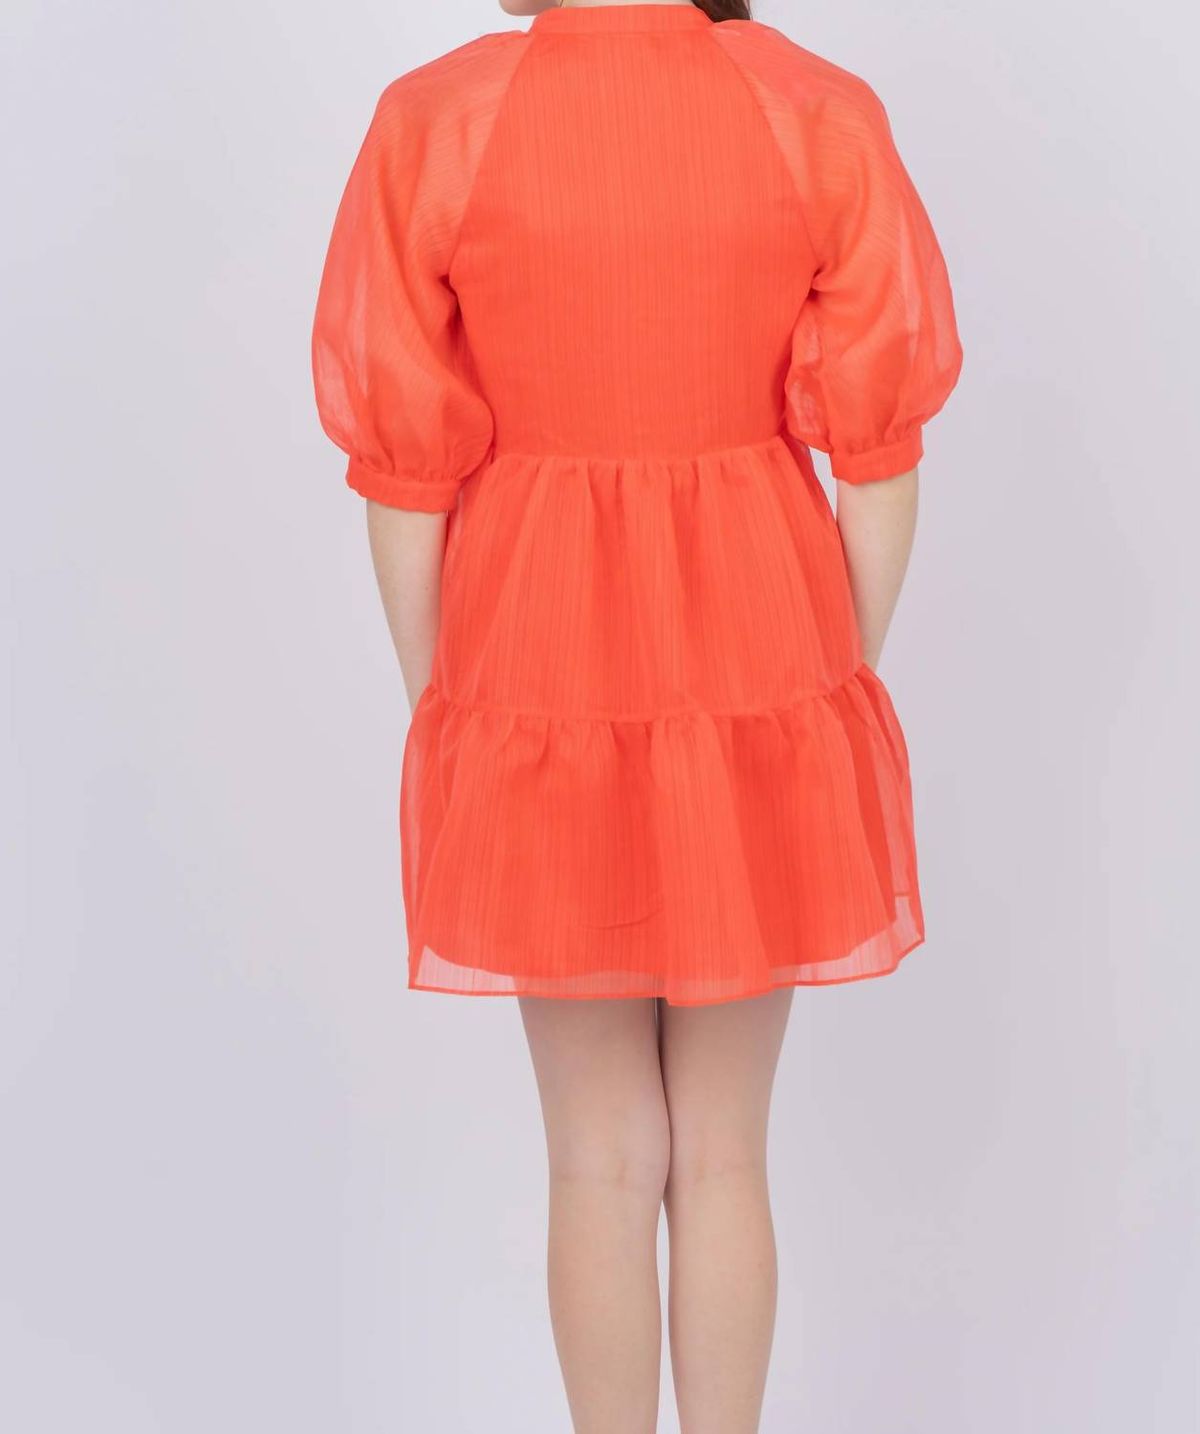 Style 1-385356995-3236 Amanda Uprichard Size S Orange Cocktail Dress on Queenly